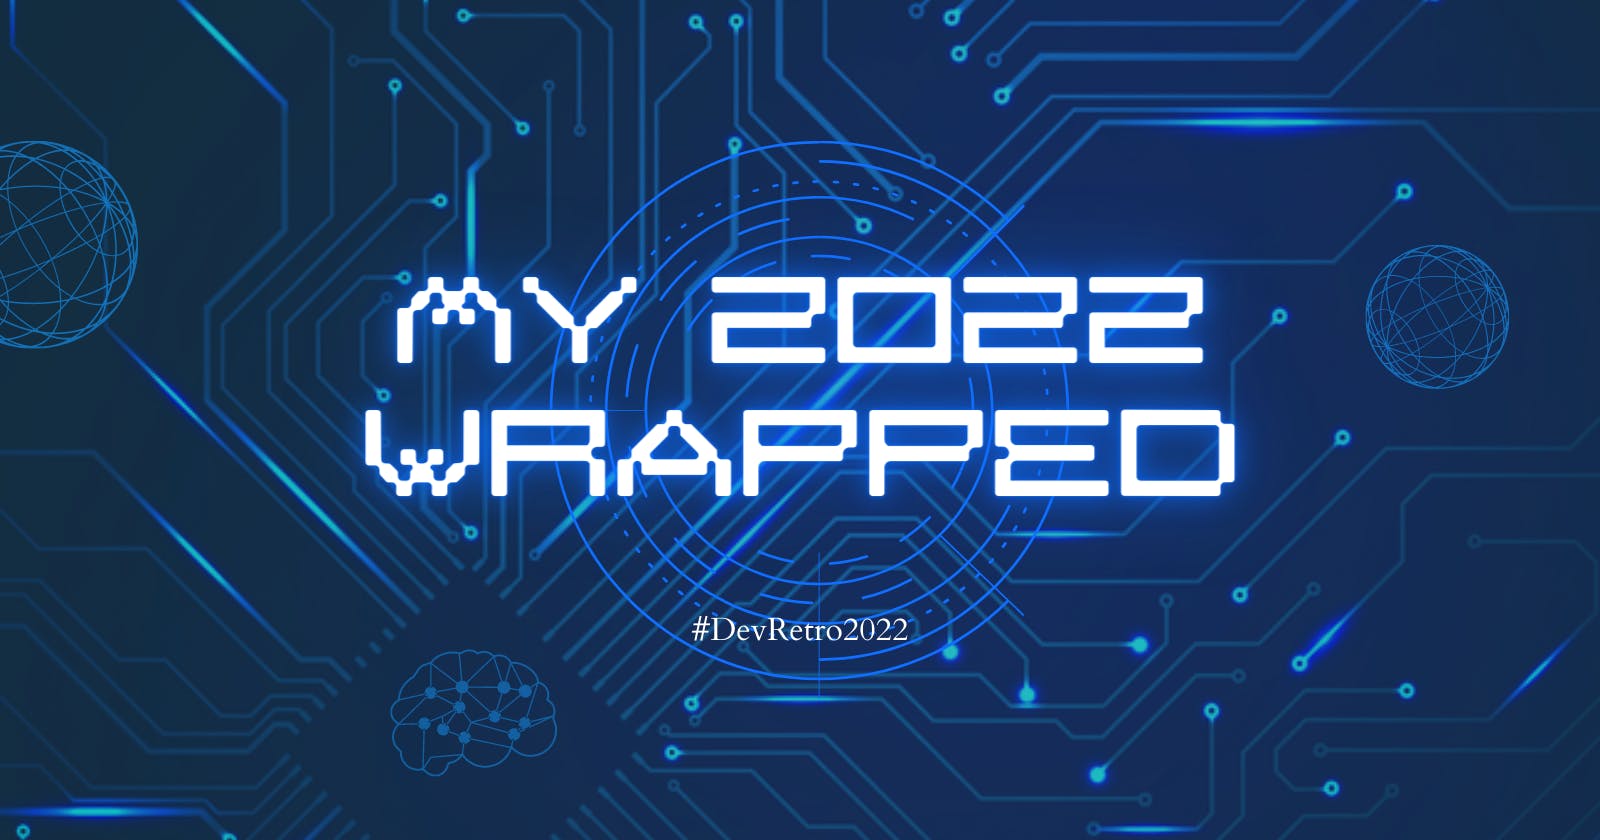 My 2022 Wrapped - Dev Retro 2022